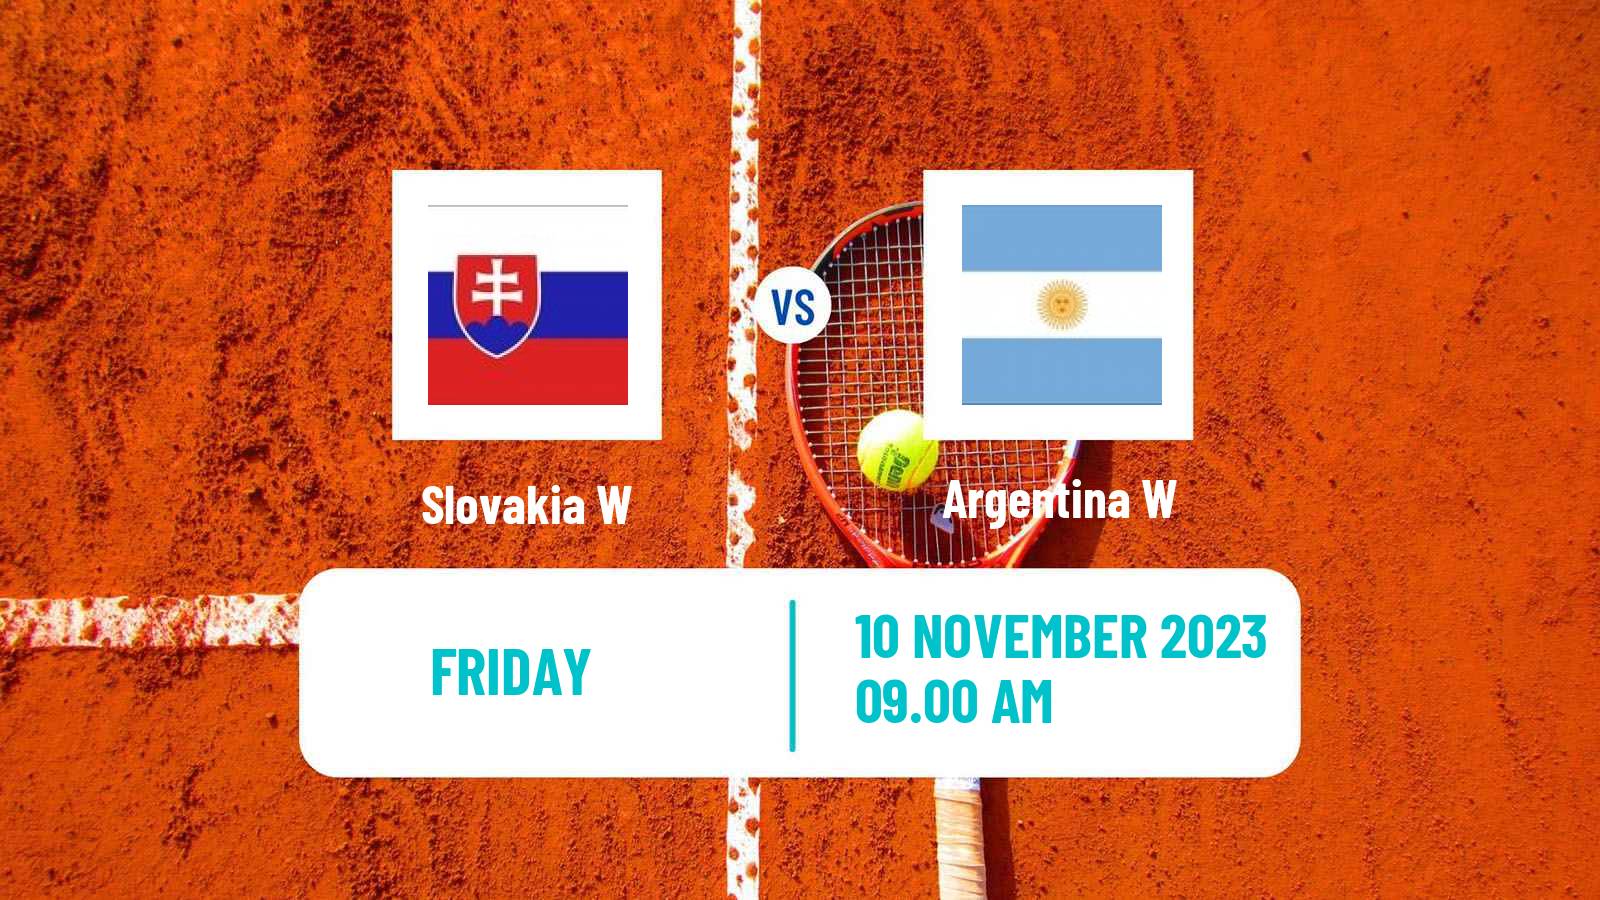 Tennis WTA Billie Jean King Cup World Group Teams Slovakia W - Argentina W